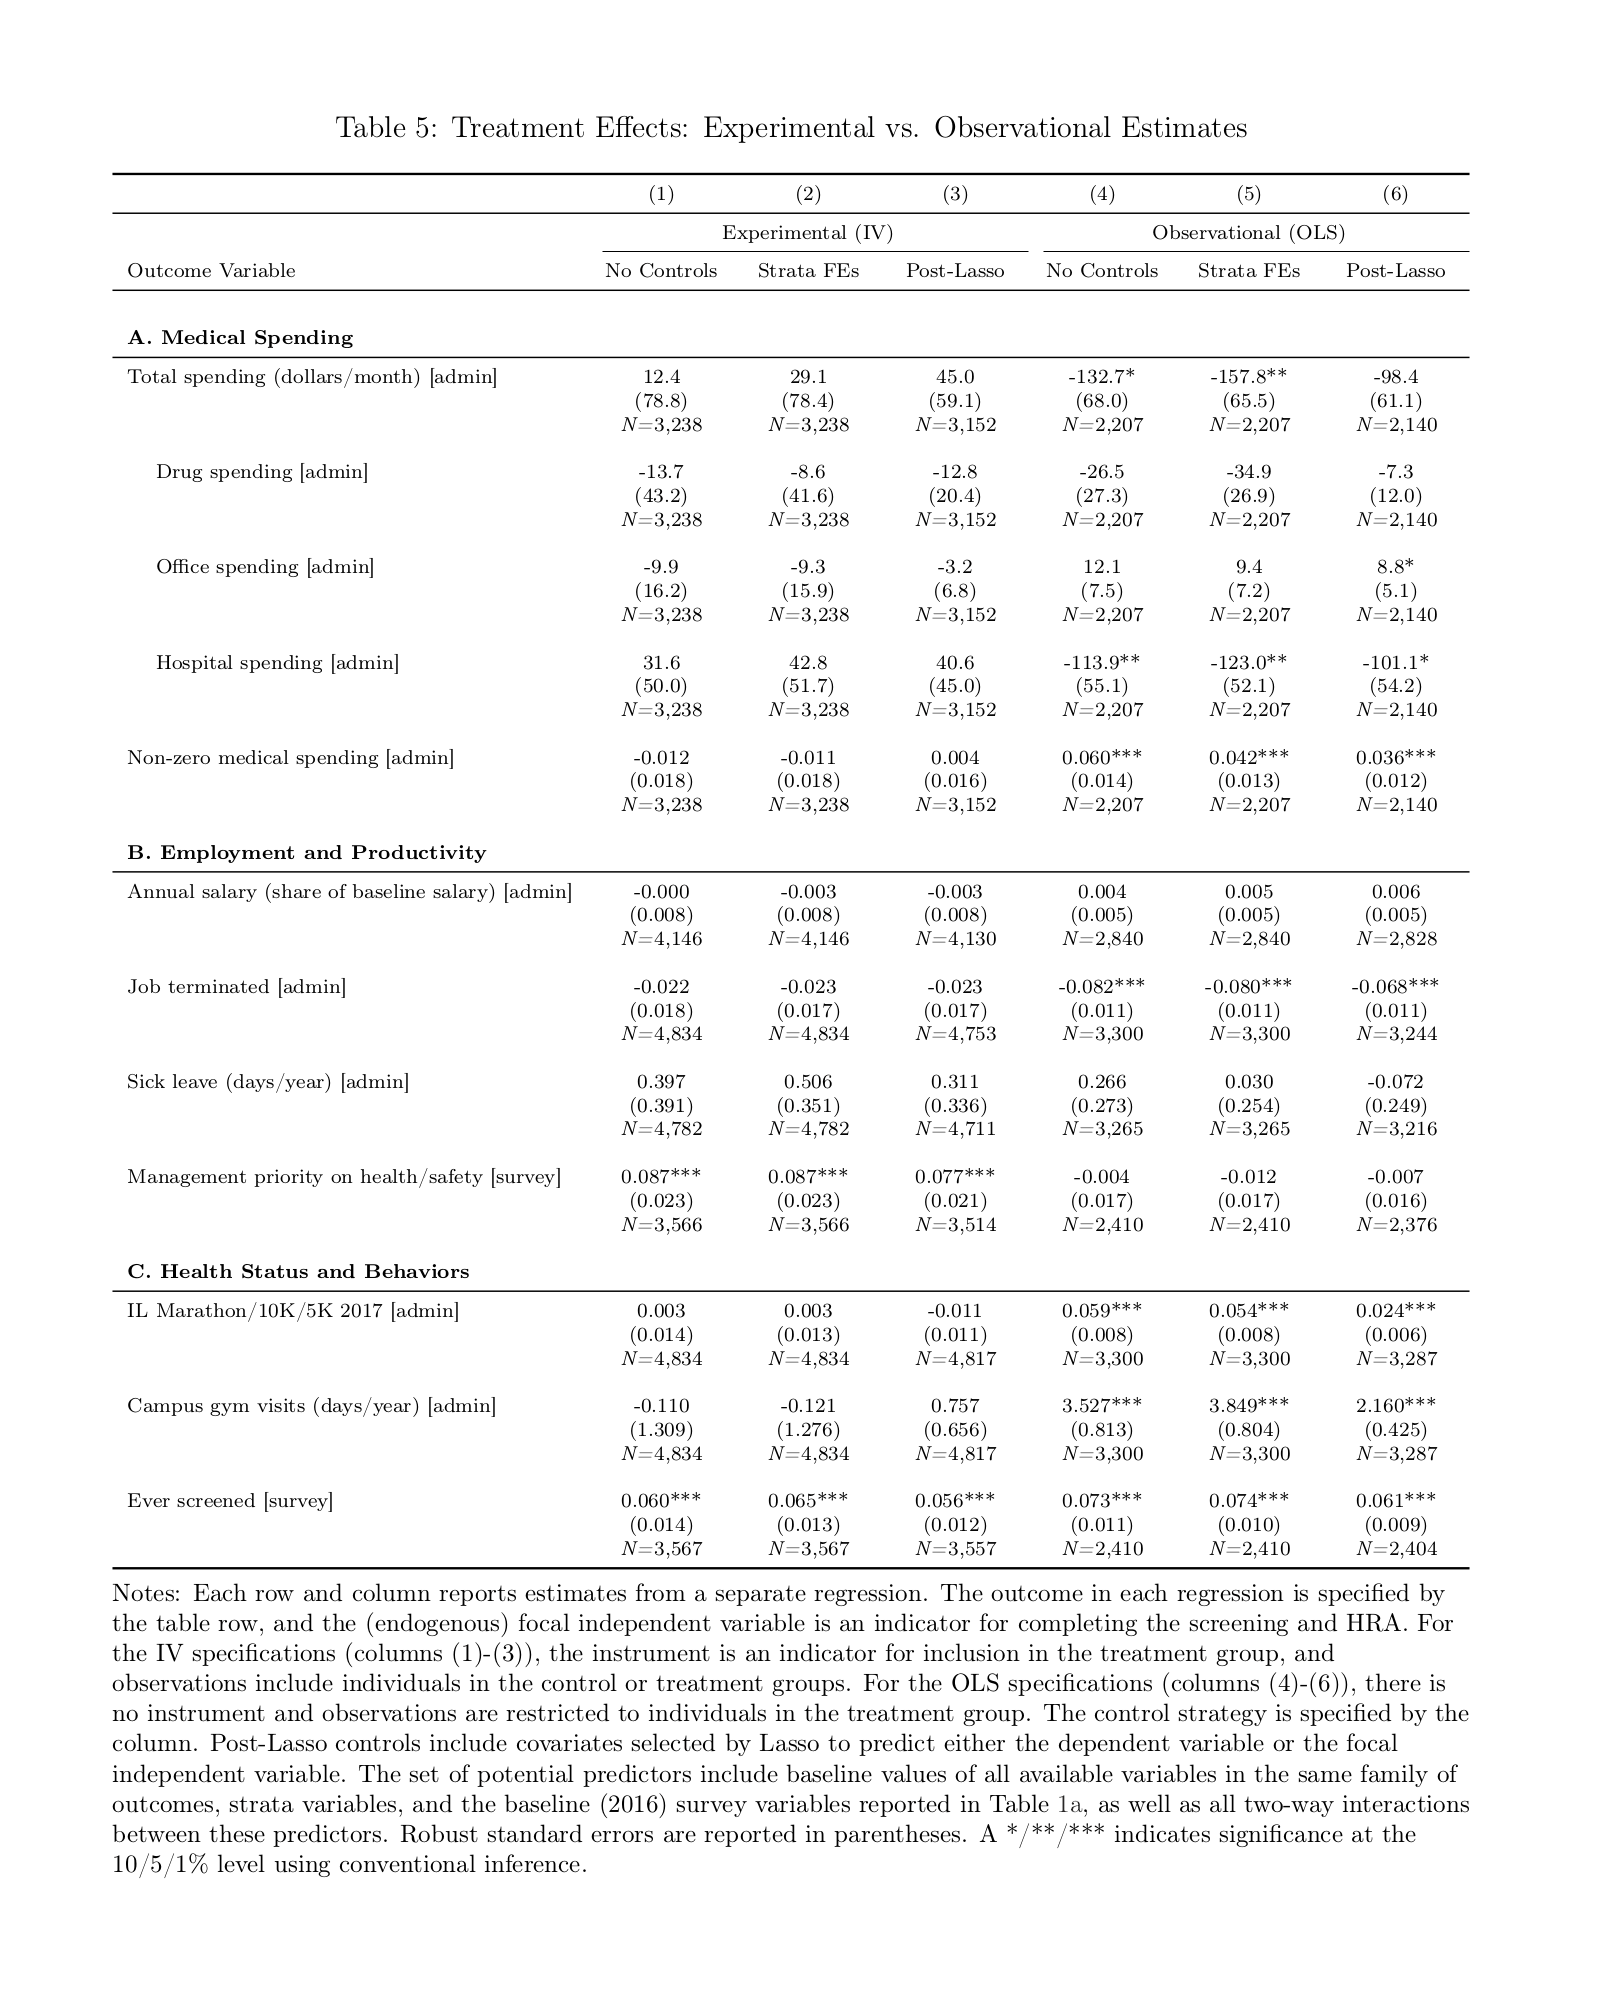 Table 5, comparing the randomized estimate with the correlational estimates